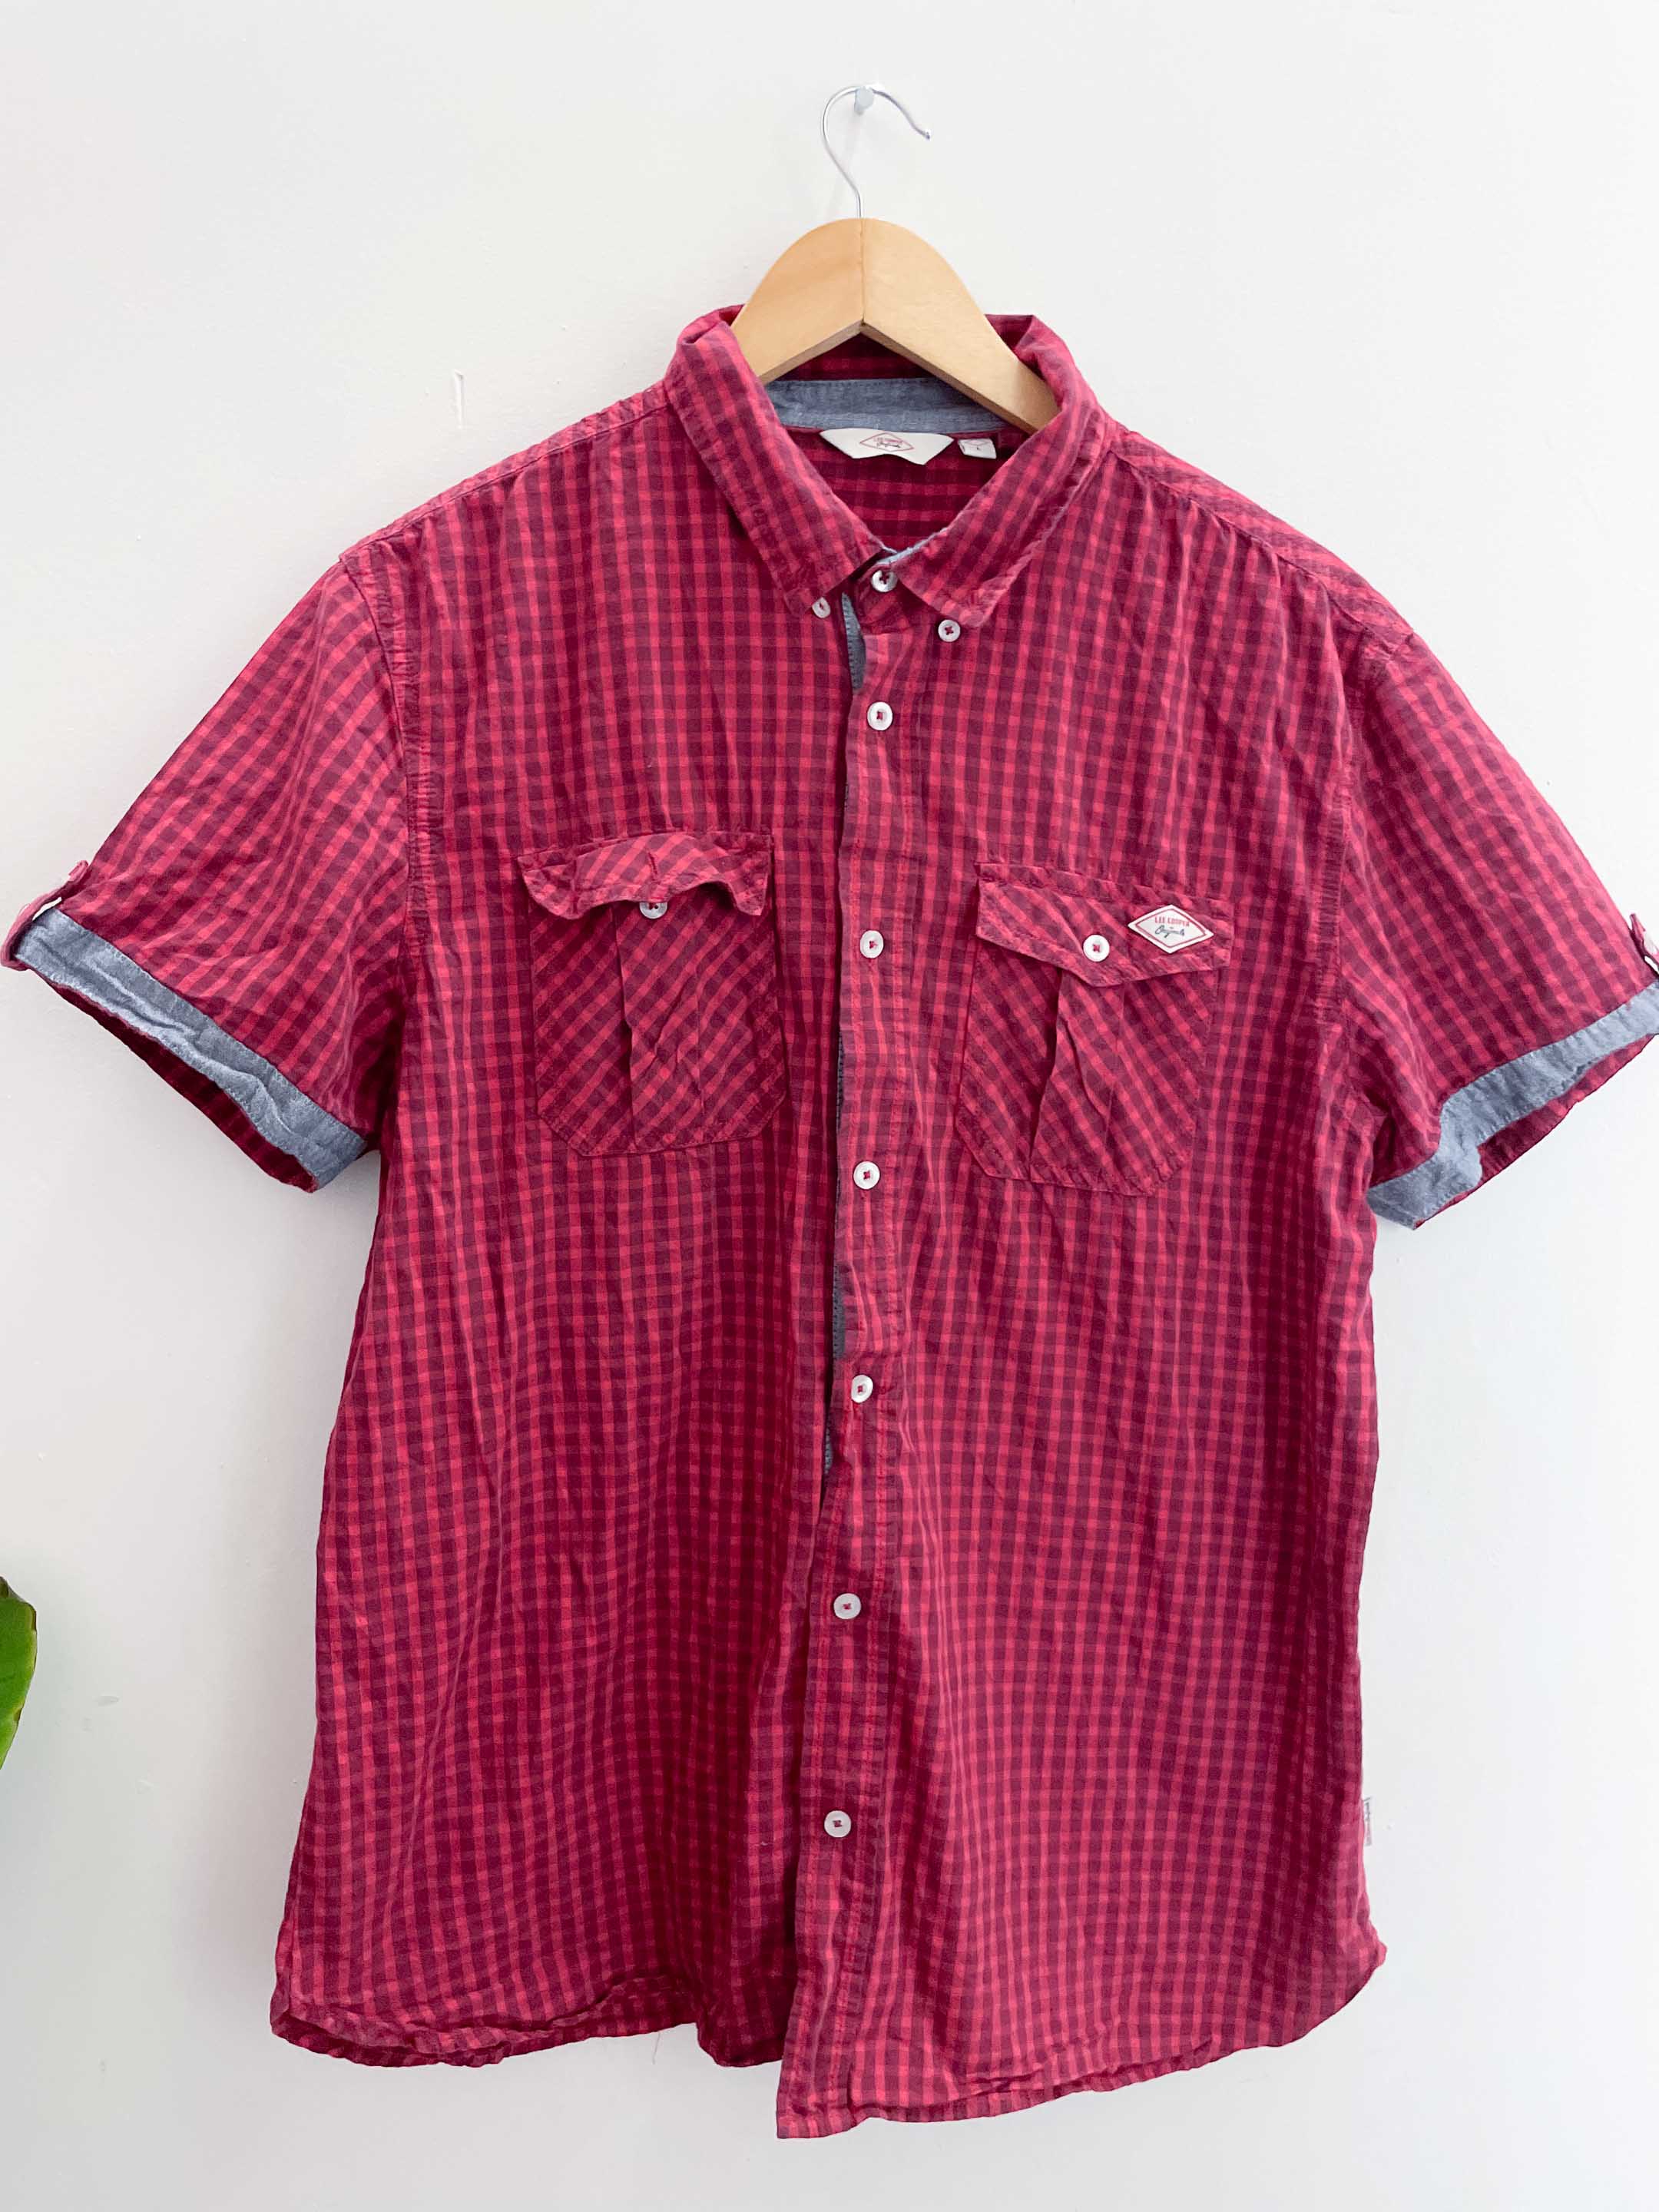 Vintage red patterned medium short sleeve shirt